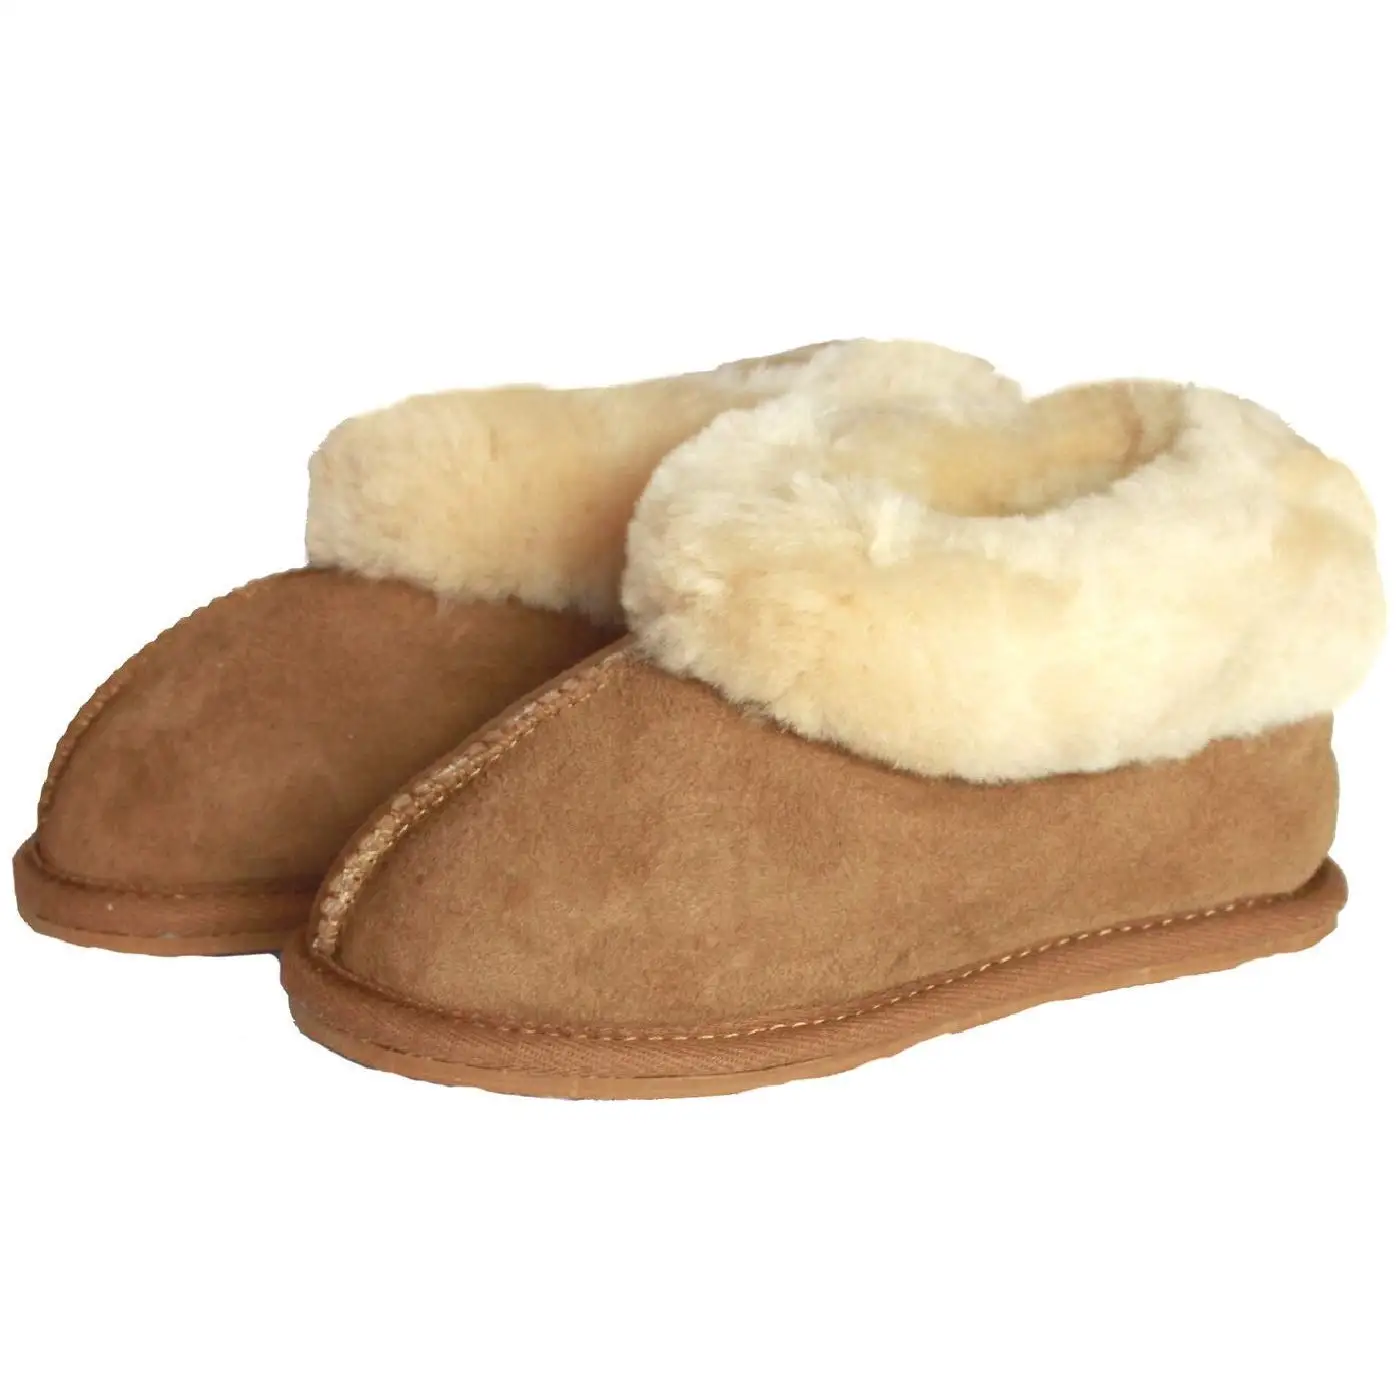 just sheepskin childrens slippers